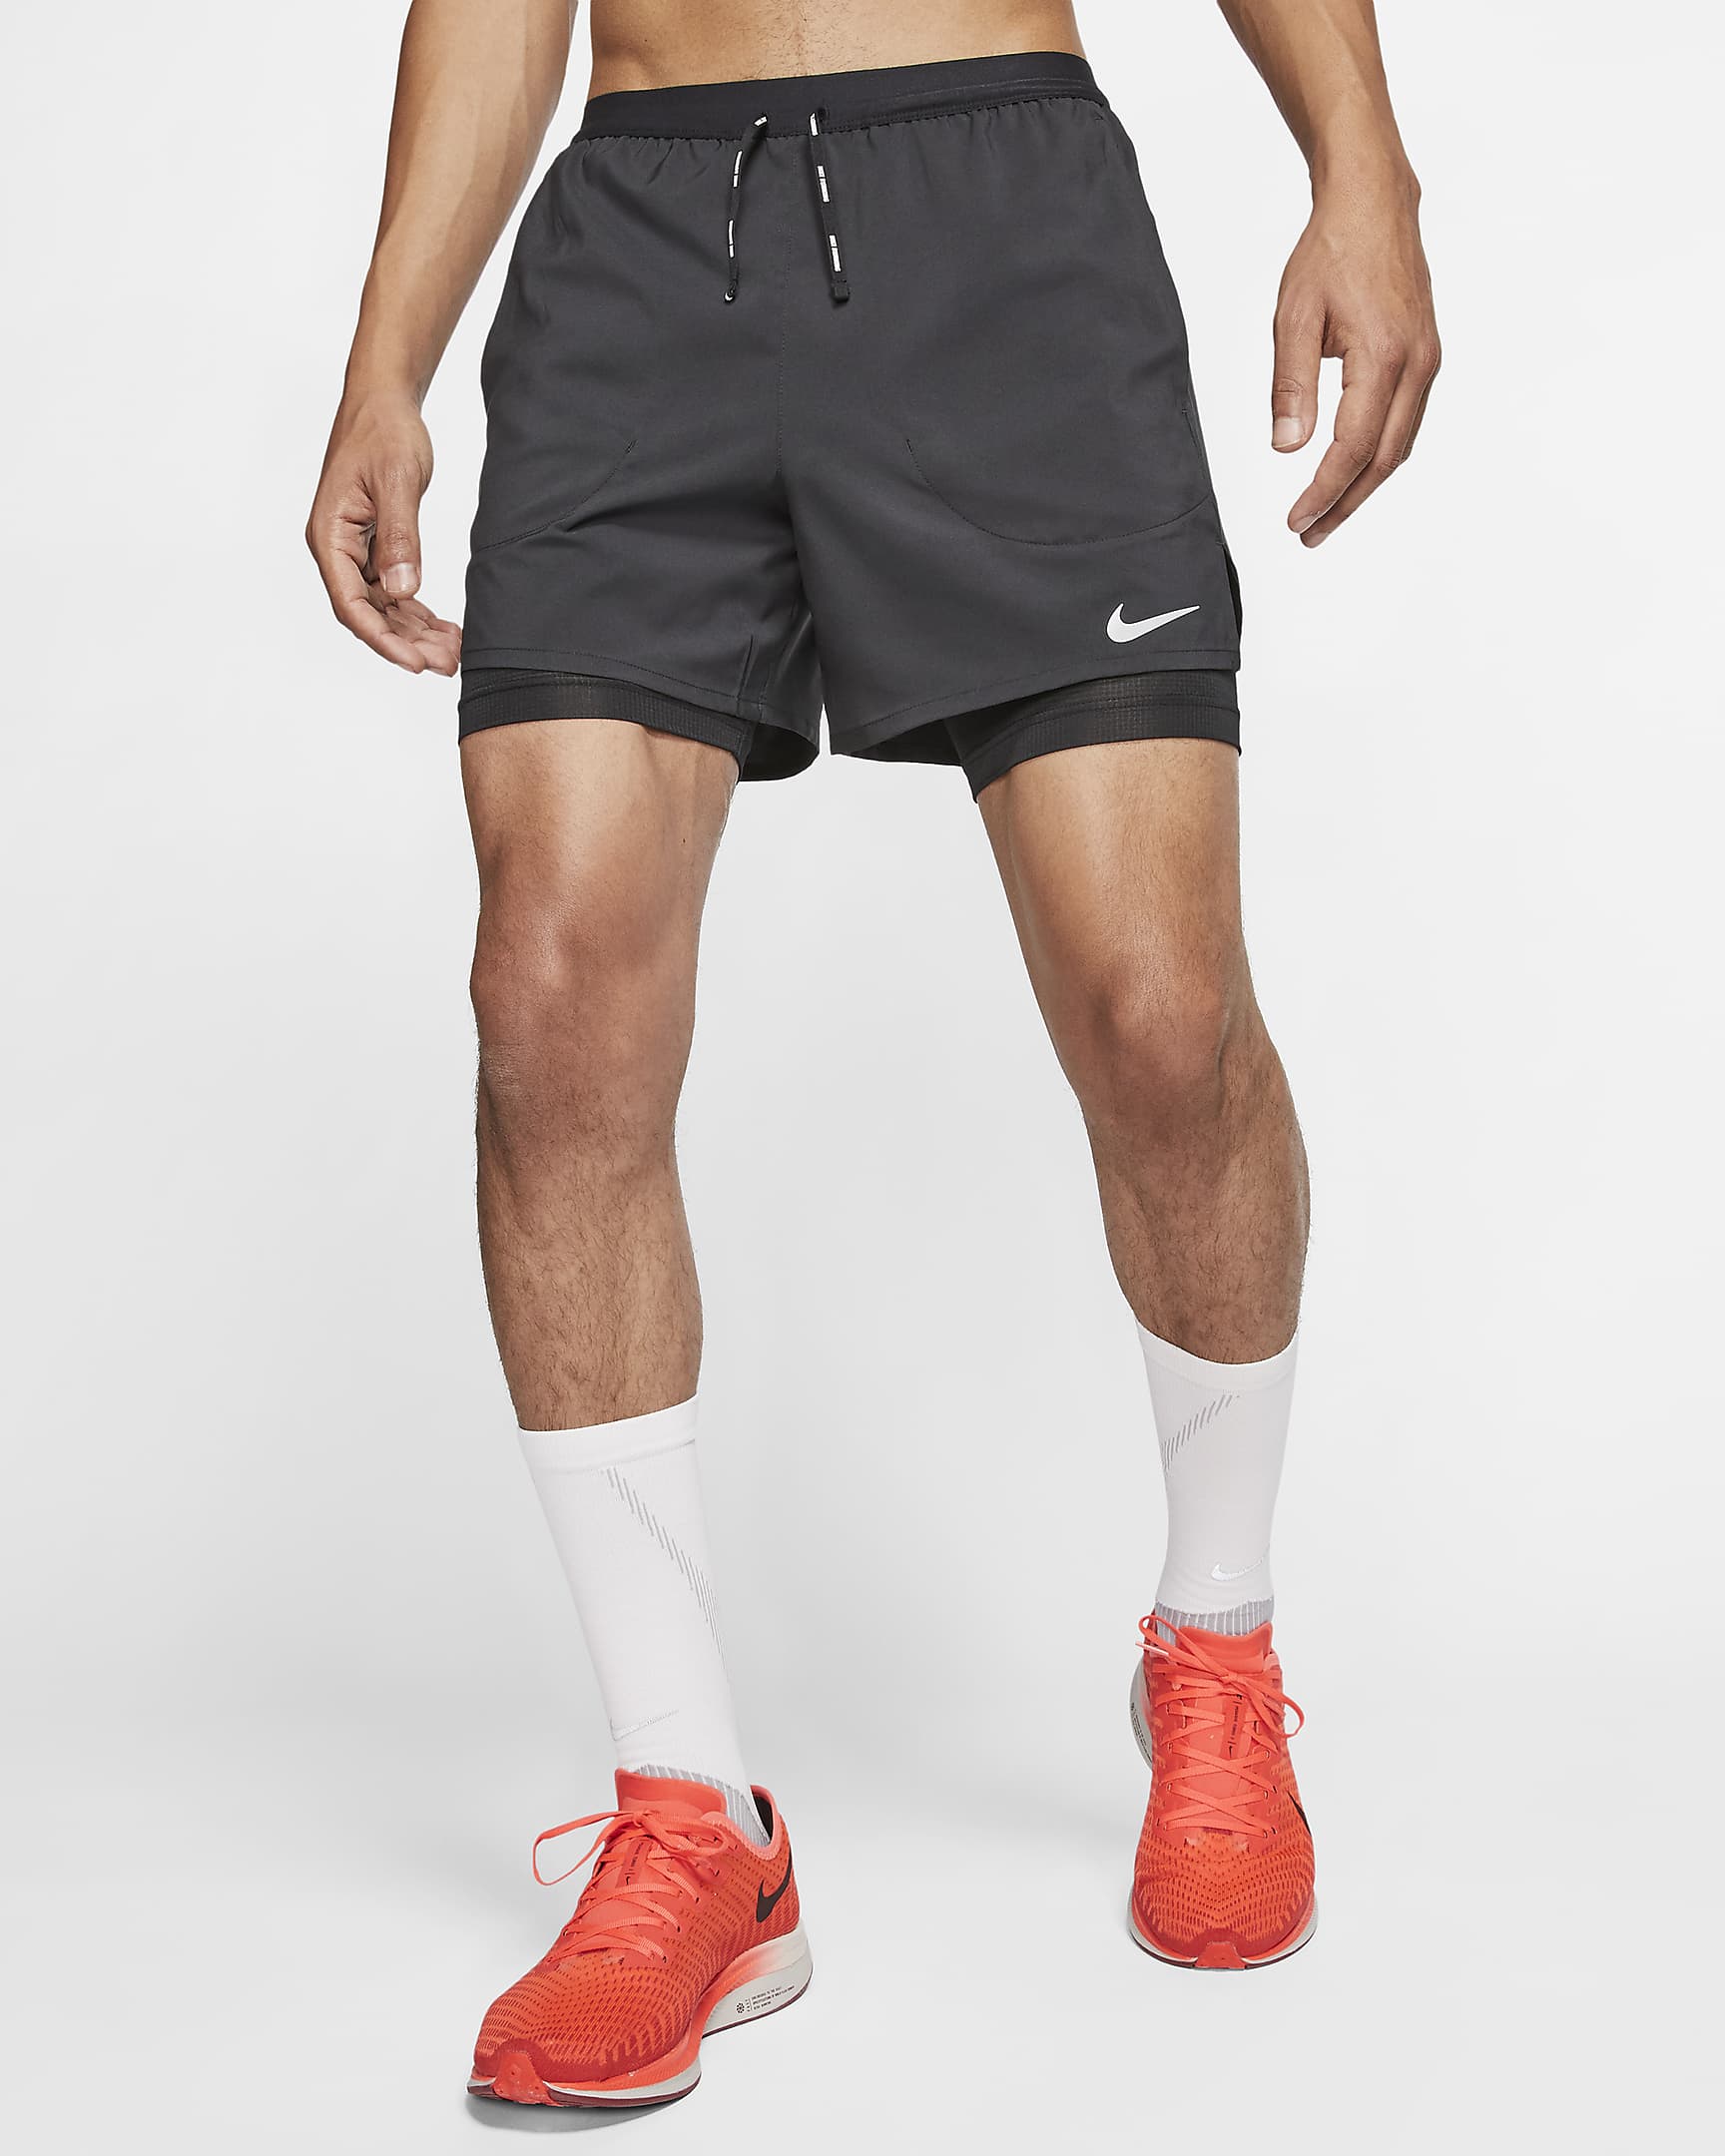 Mierda Higgins misericordia Nike Flex Stride Men's 5" 2-In-1 Running Shorts. Nike.com